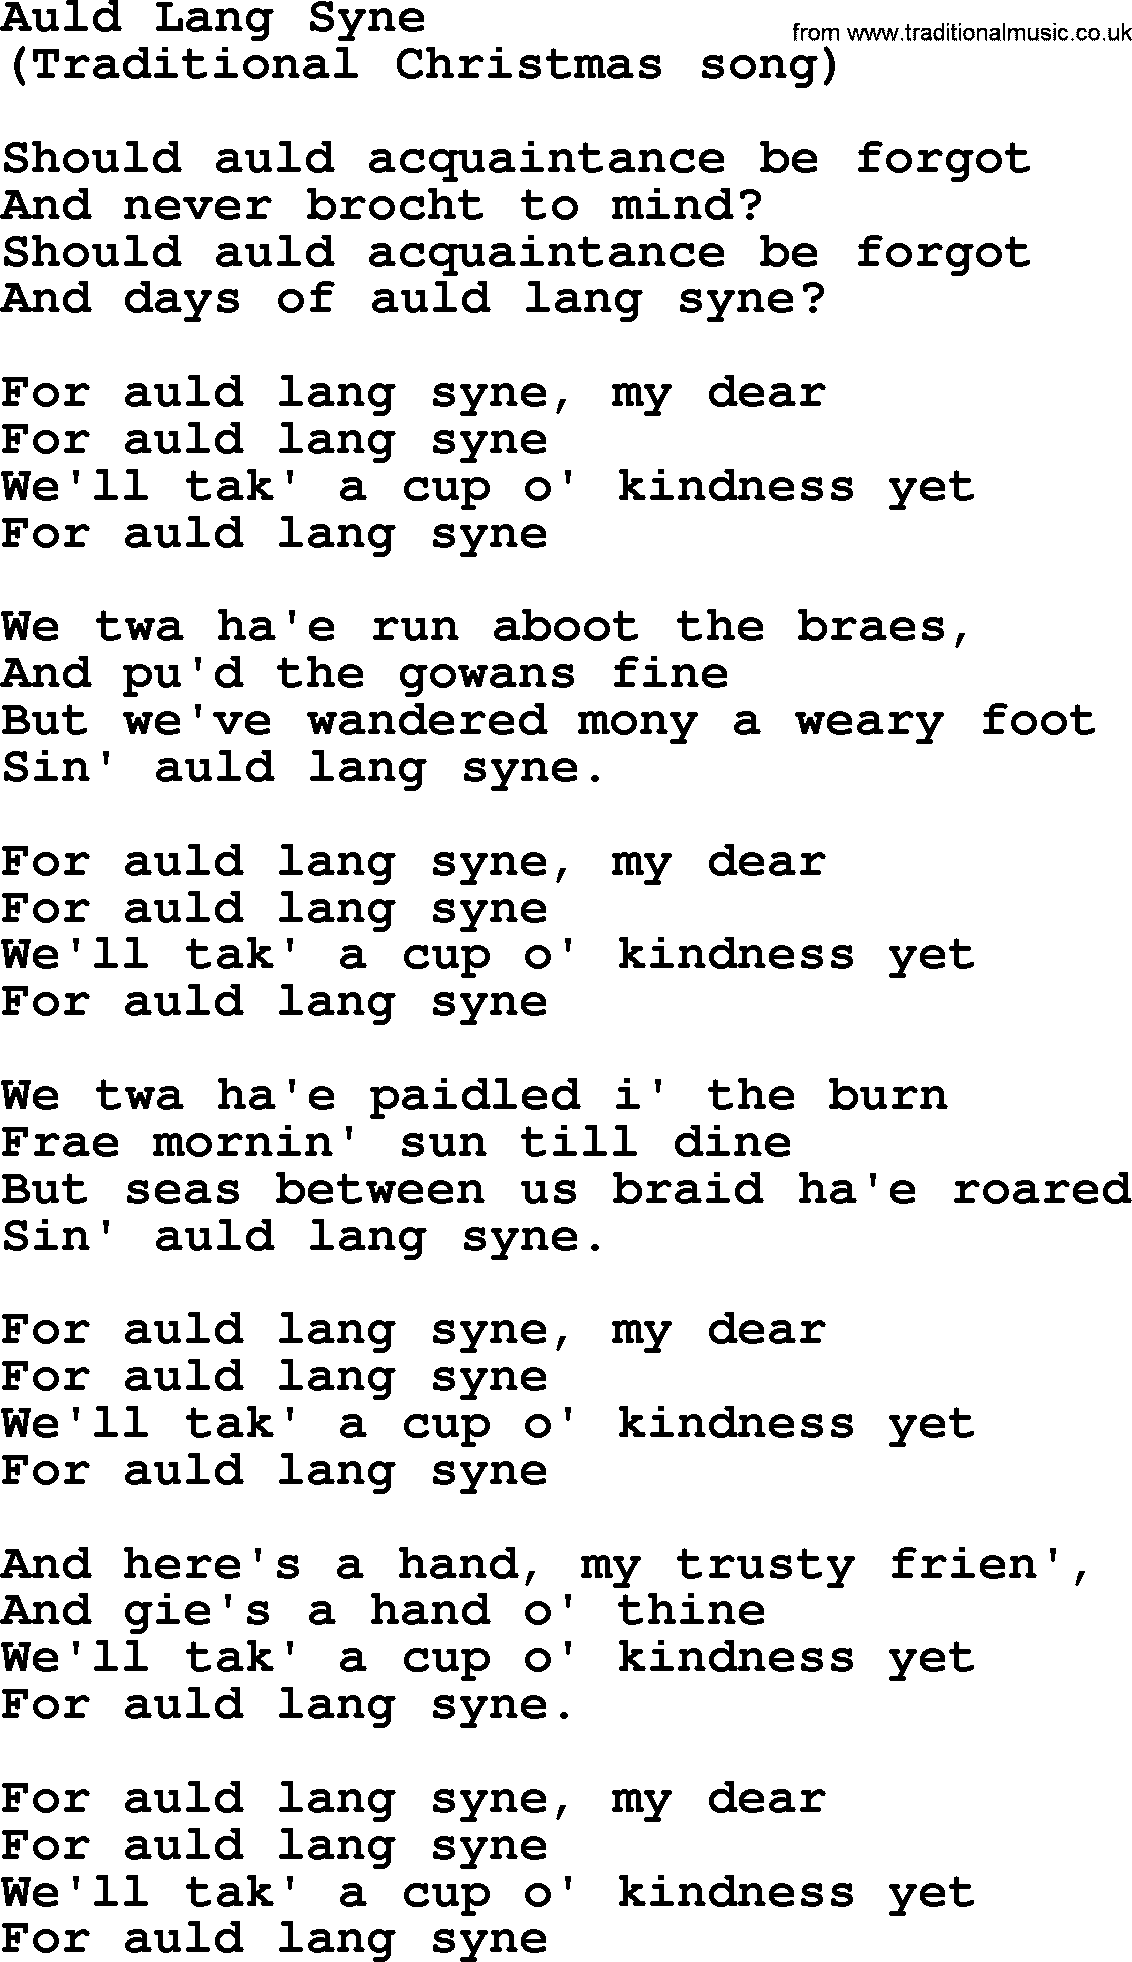 Bruce Springsteen song: Auld Lang Syne lyrics